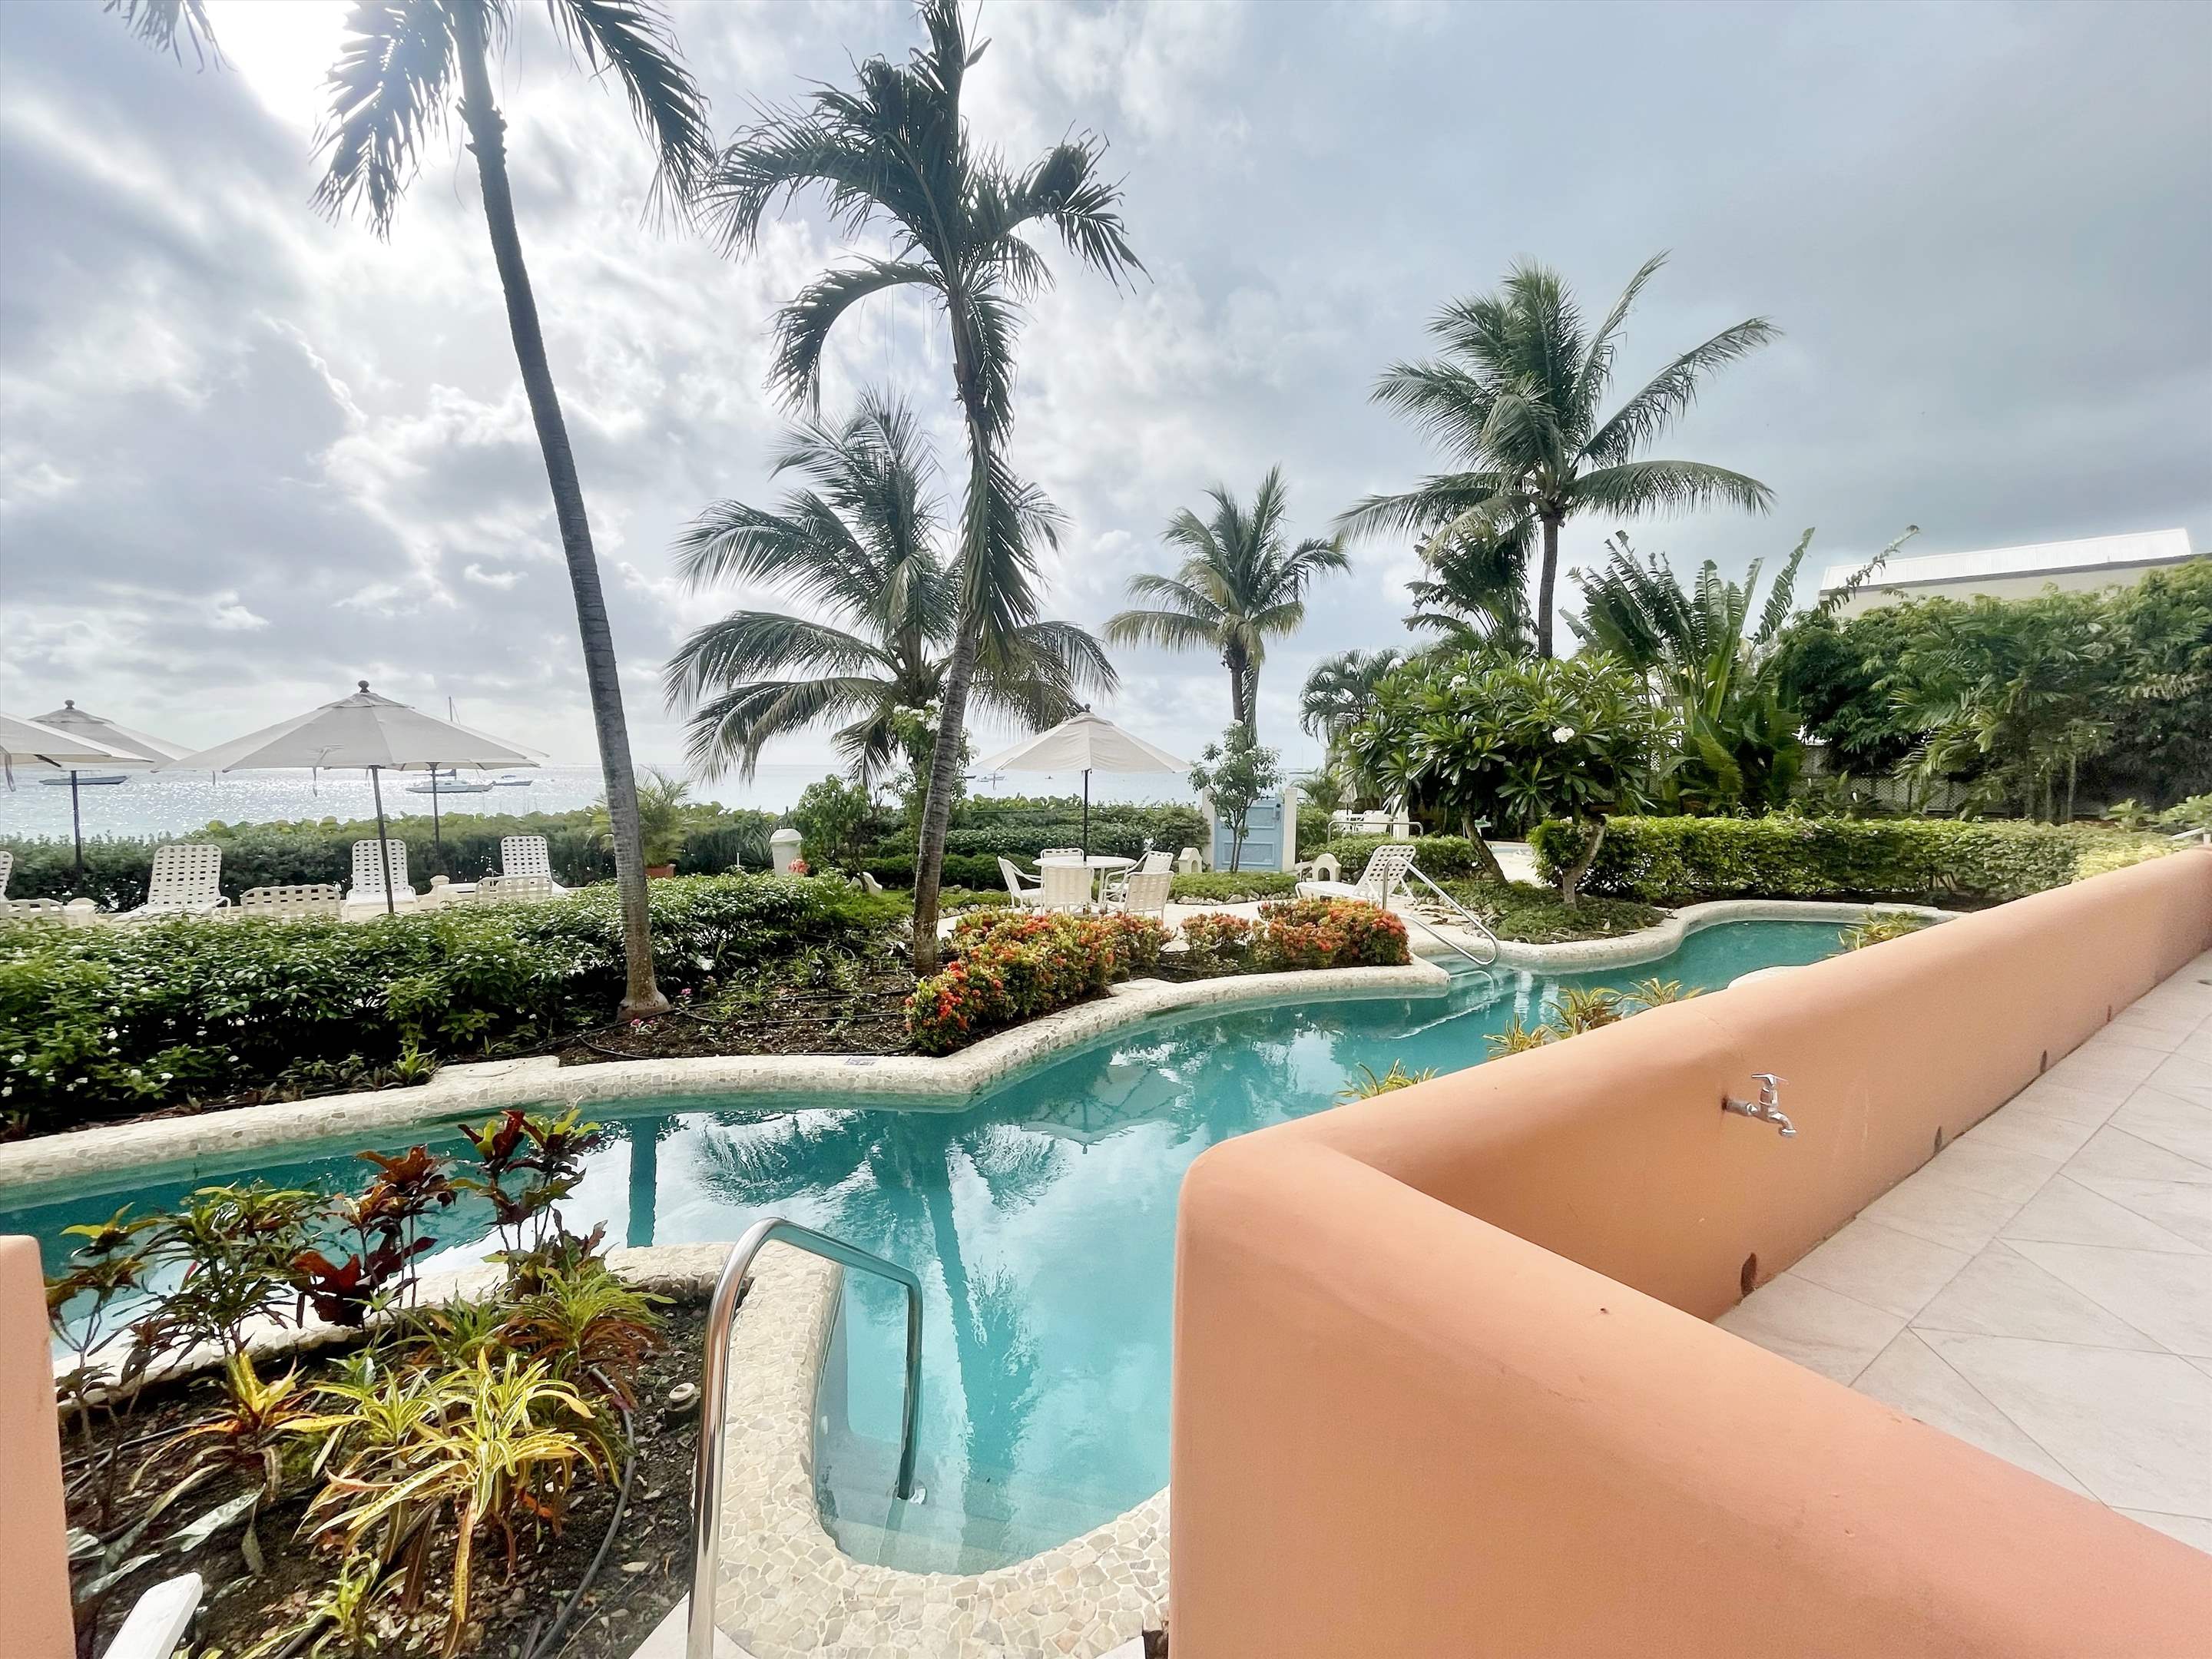 Villas on the Beach 103, 2 bedroom, 2 bedroom apartment in St. James & West Coast, Barbados Photo #8